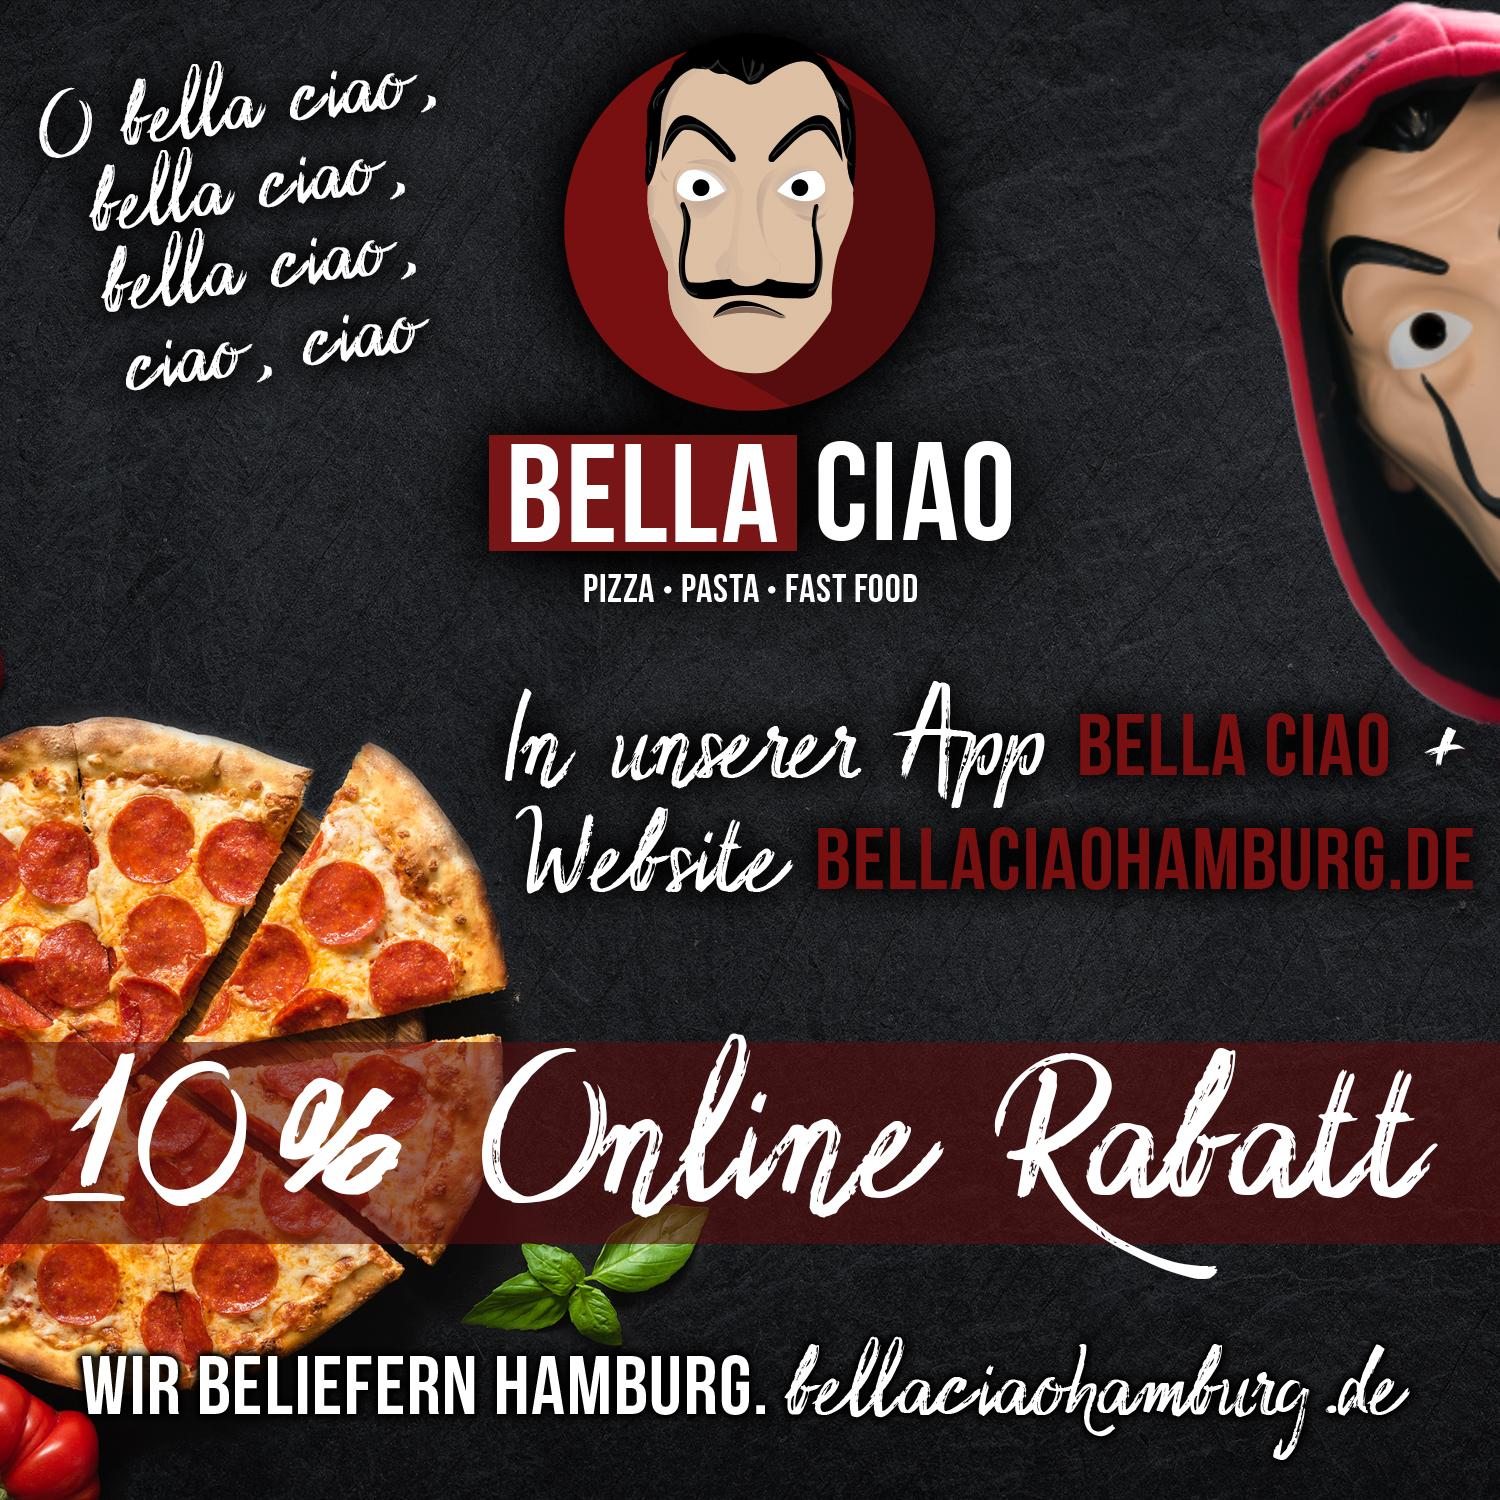 Restaurant "Bella Ciao" in Hamburg